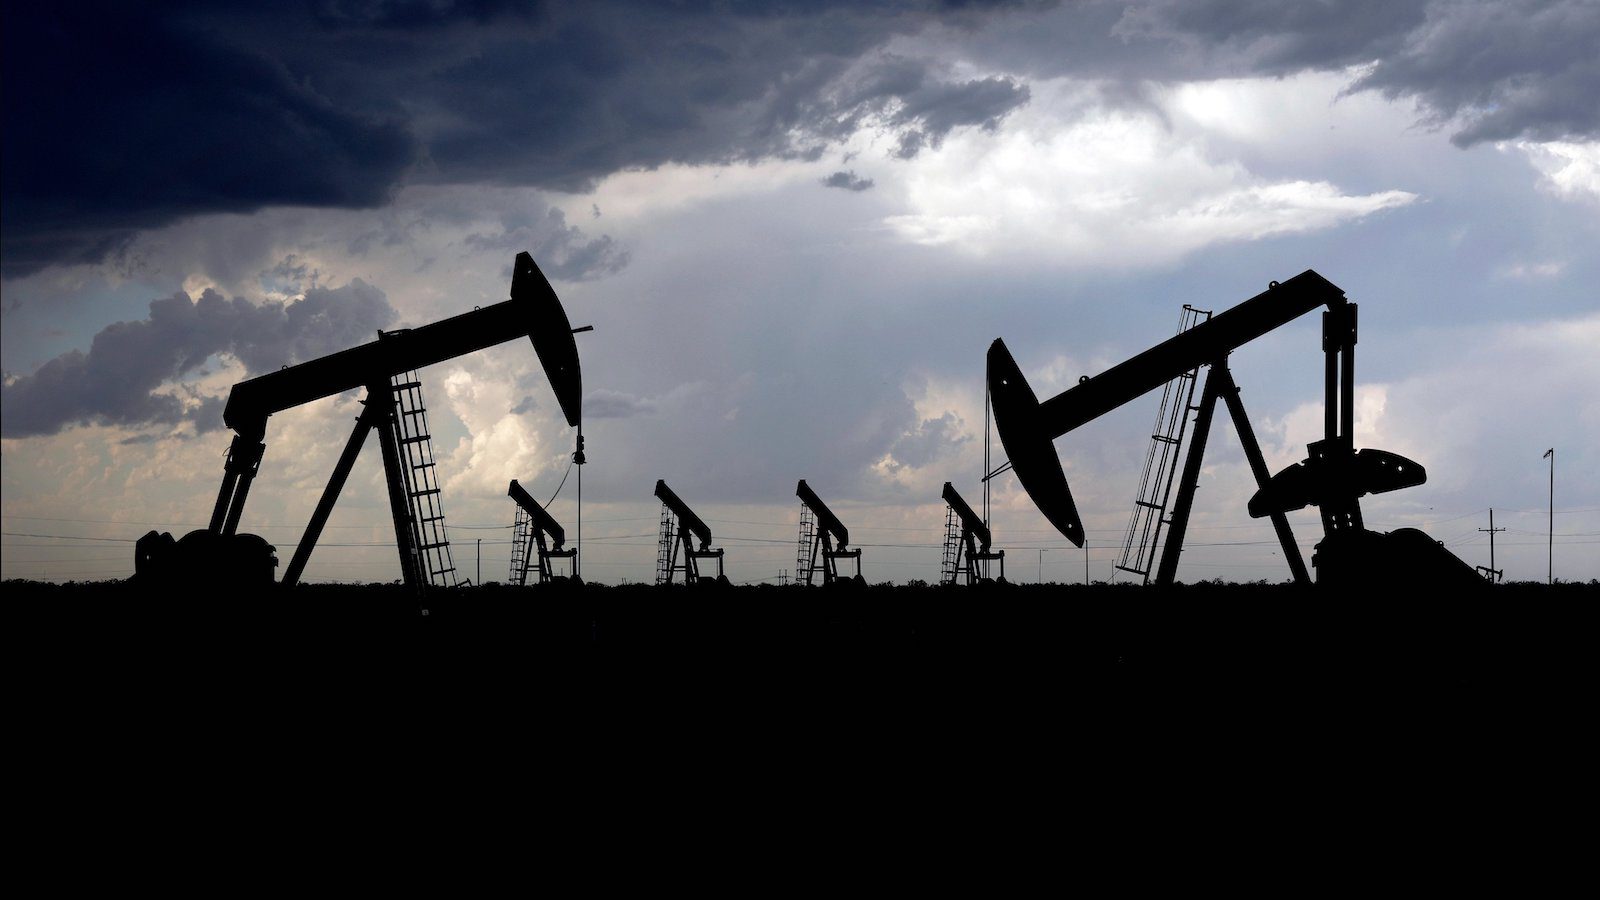 Implications of OPEC Cuts for Texas